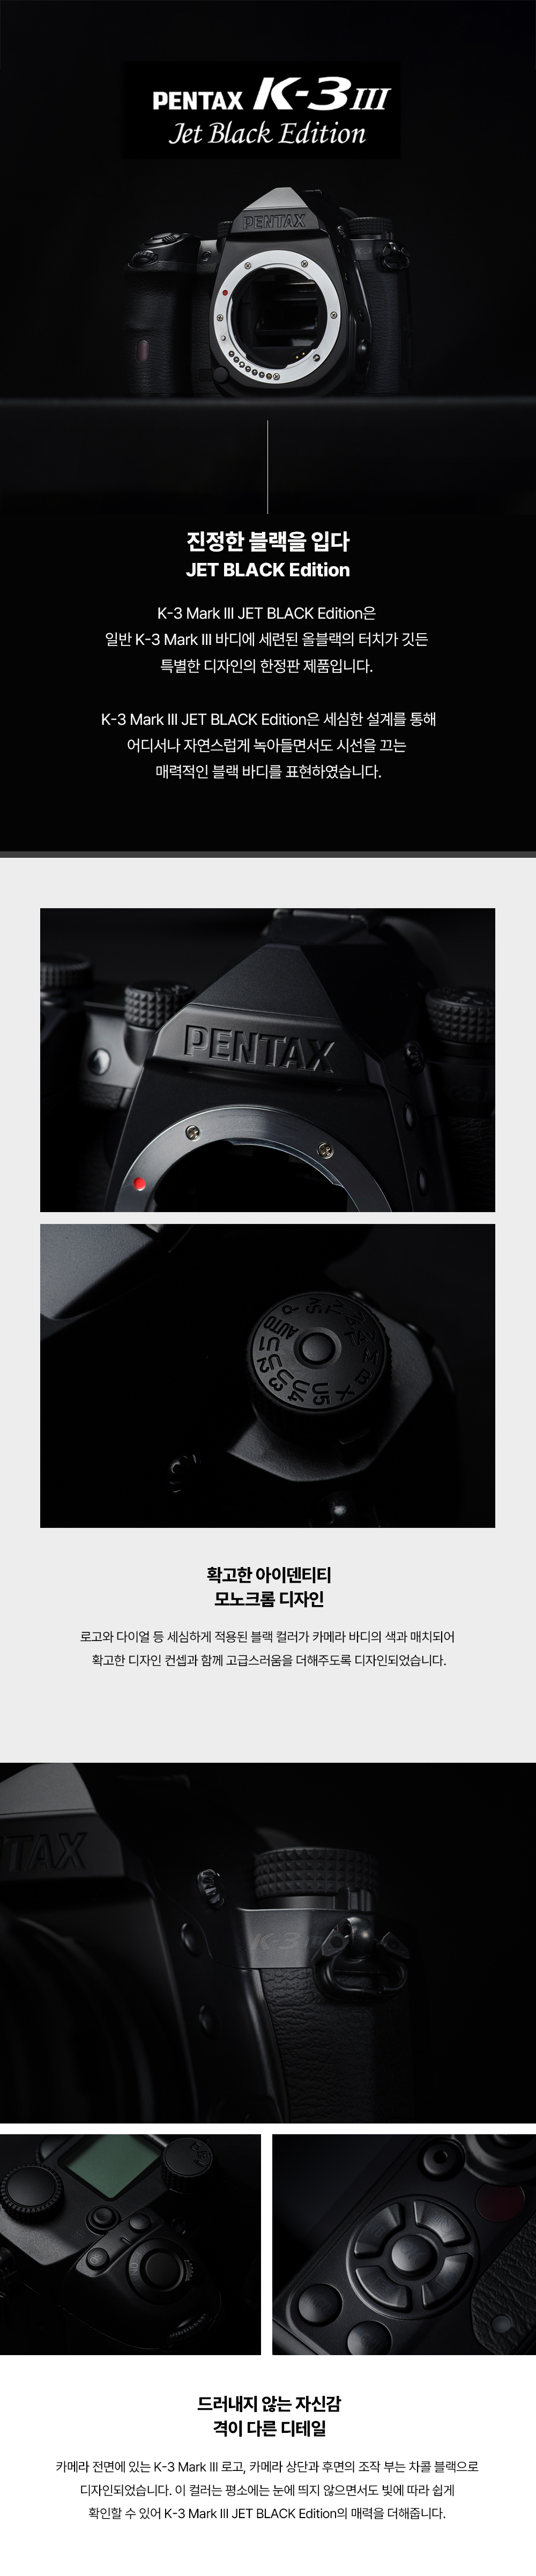 PENTAX K-3 Mark III JET BLACK Edition (한정판) 